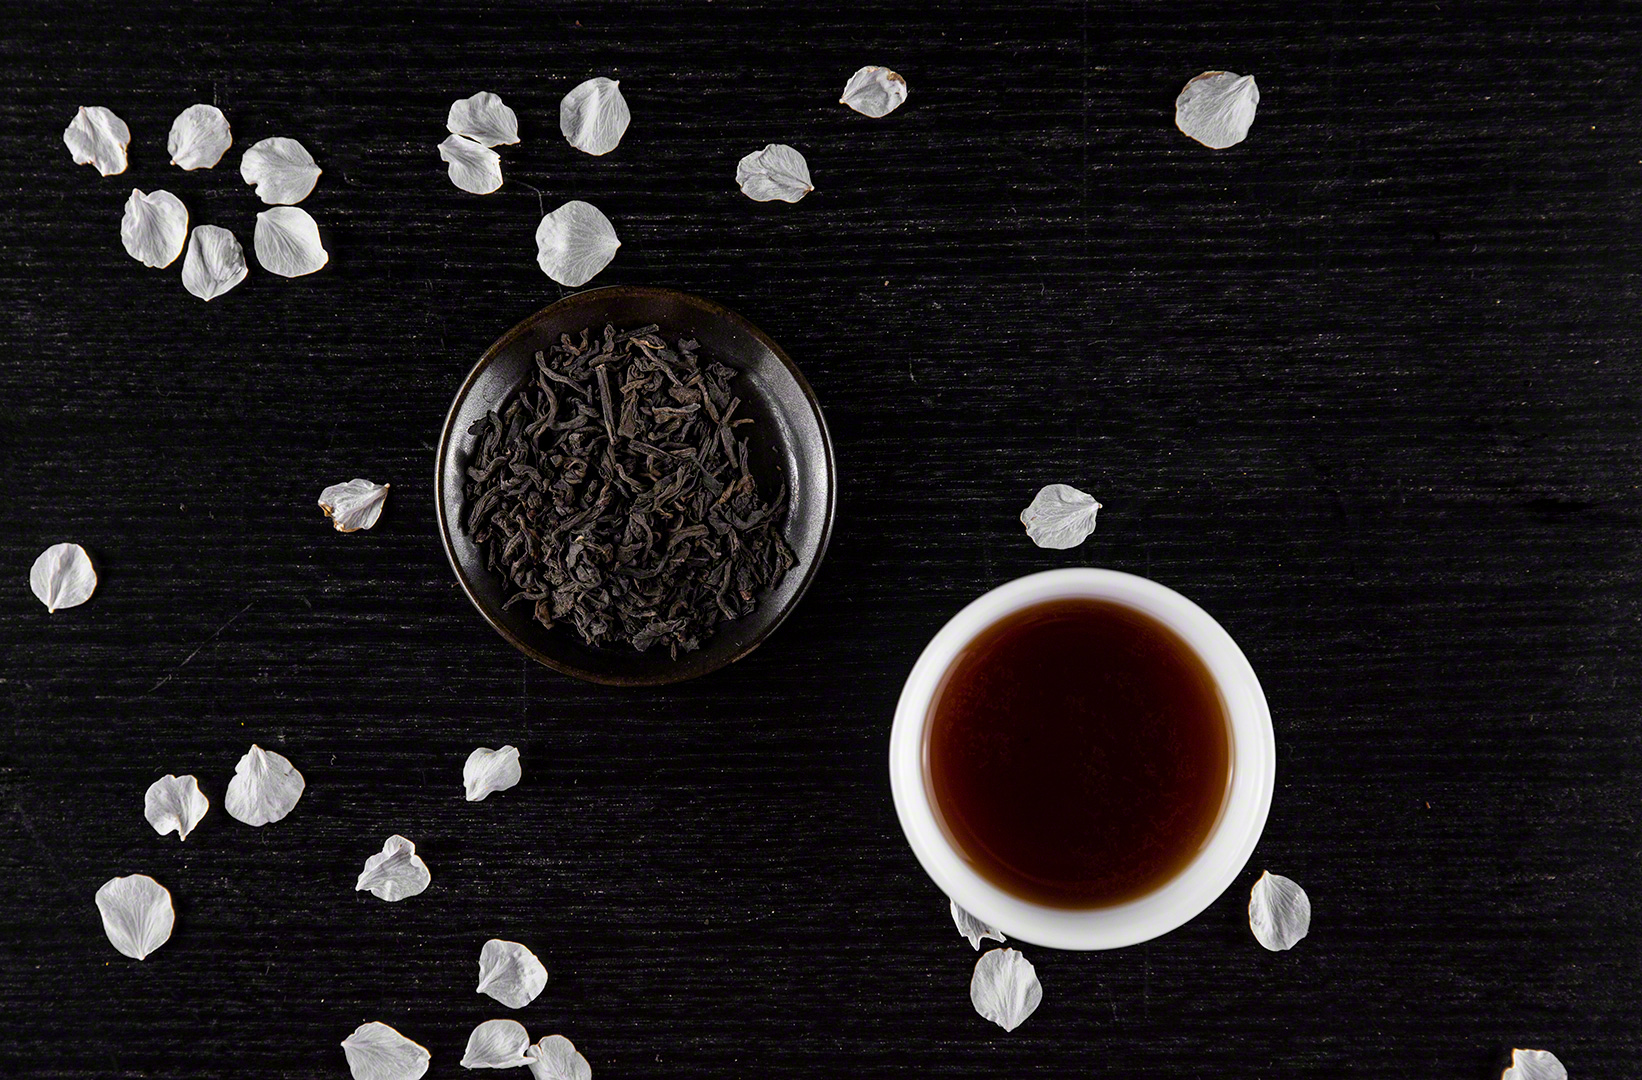 Do tea leaves expire? Simple Loose Leaf Tea Company